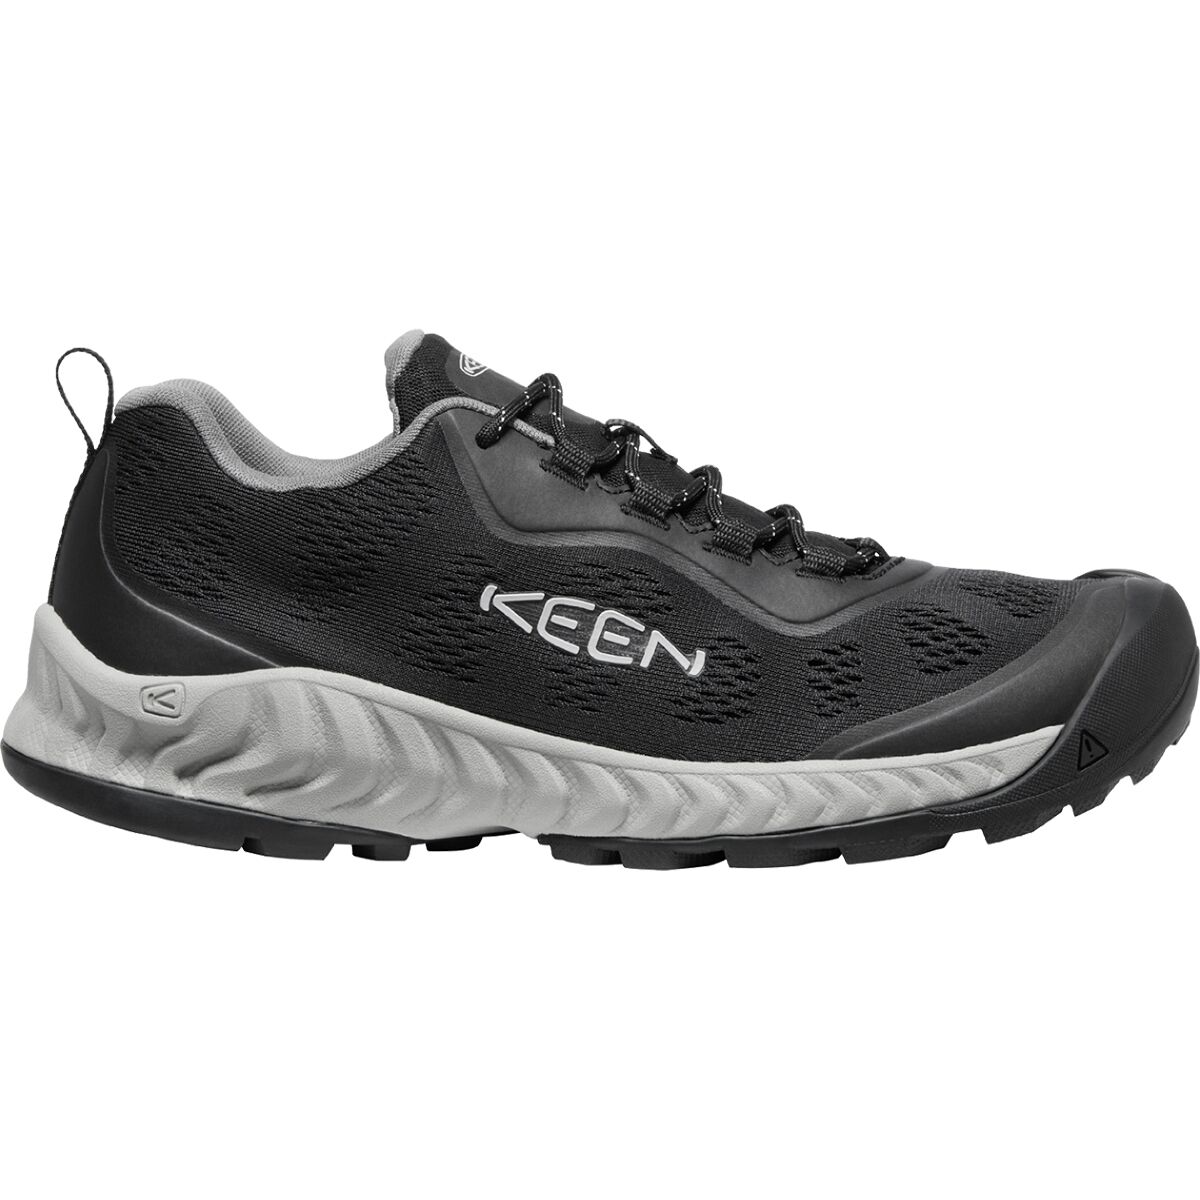 KEEN NXIS Speed Hiking Shoe - Men's